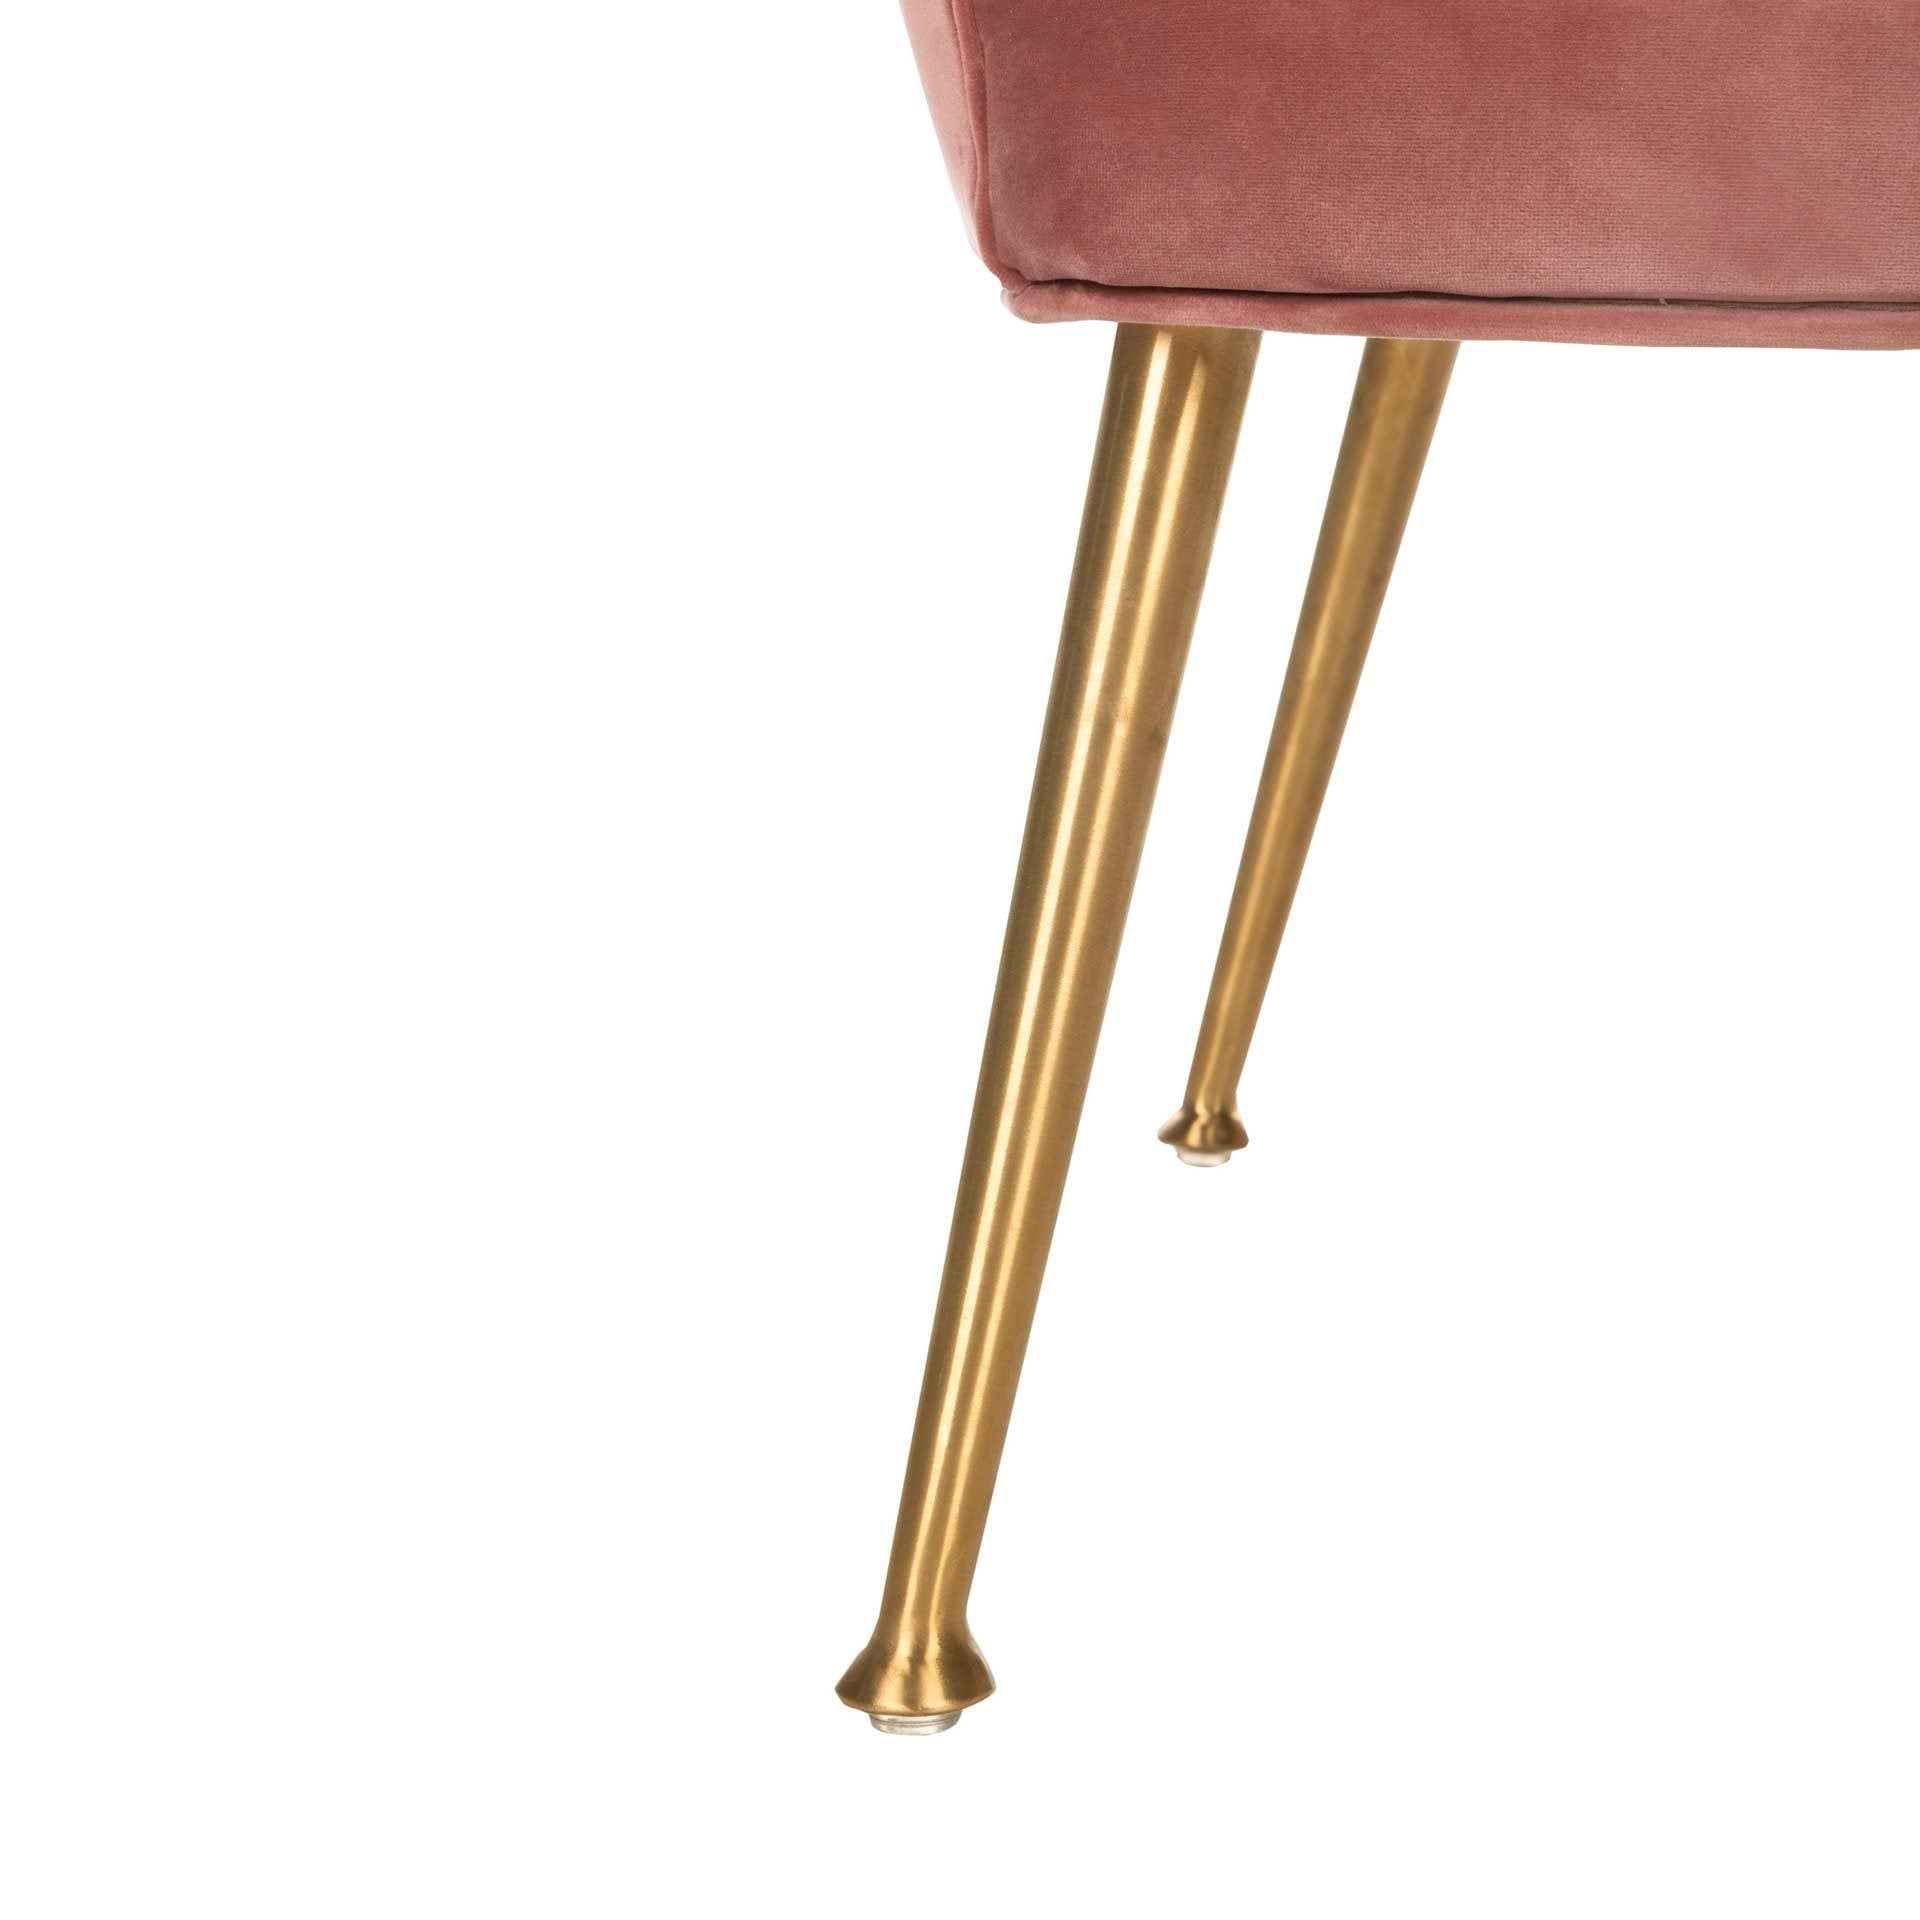 Aidan Velvet Arm Chair Dusty Rose/Gold